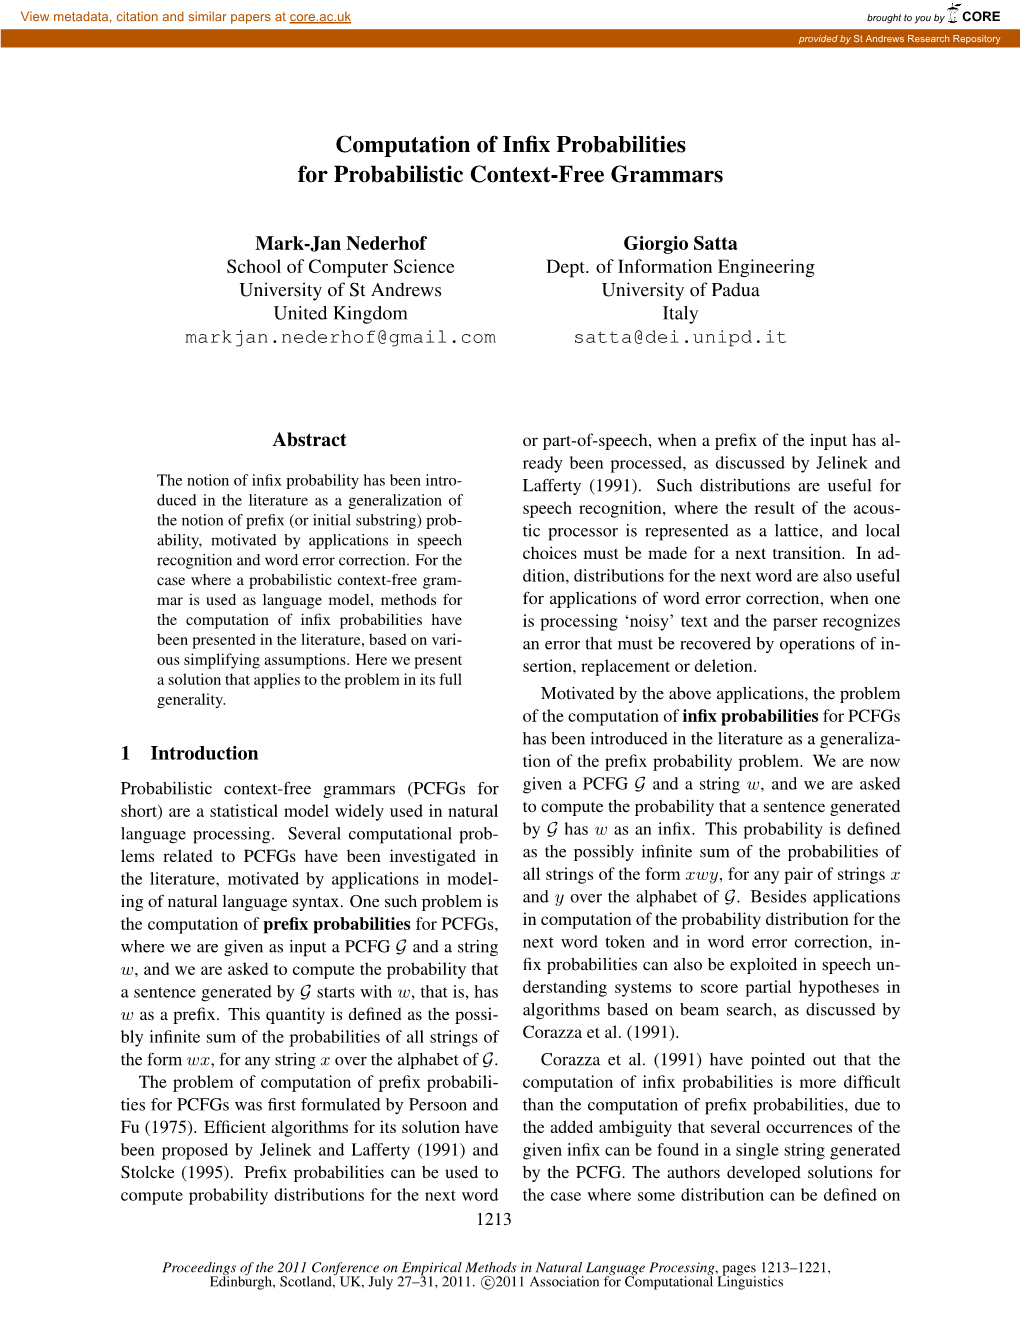 Computation of Infix Probabilities for Probabilistic Context-Free Grammars